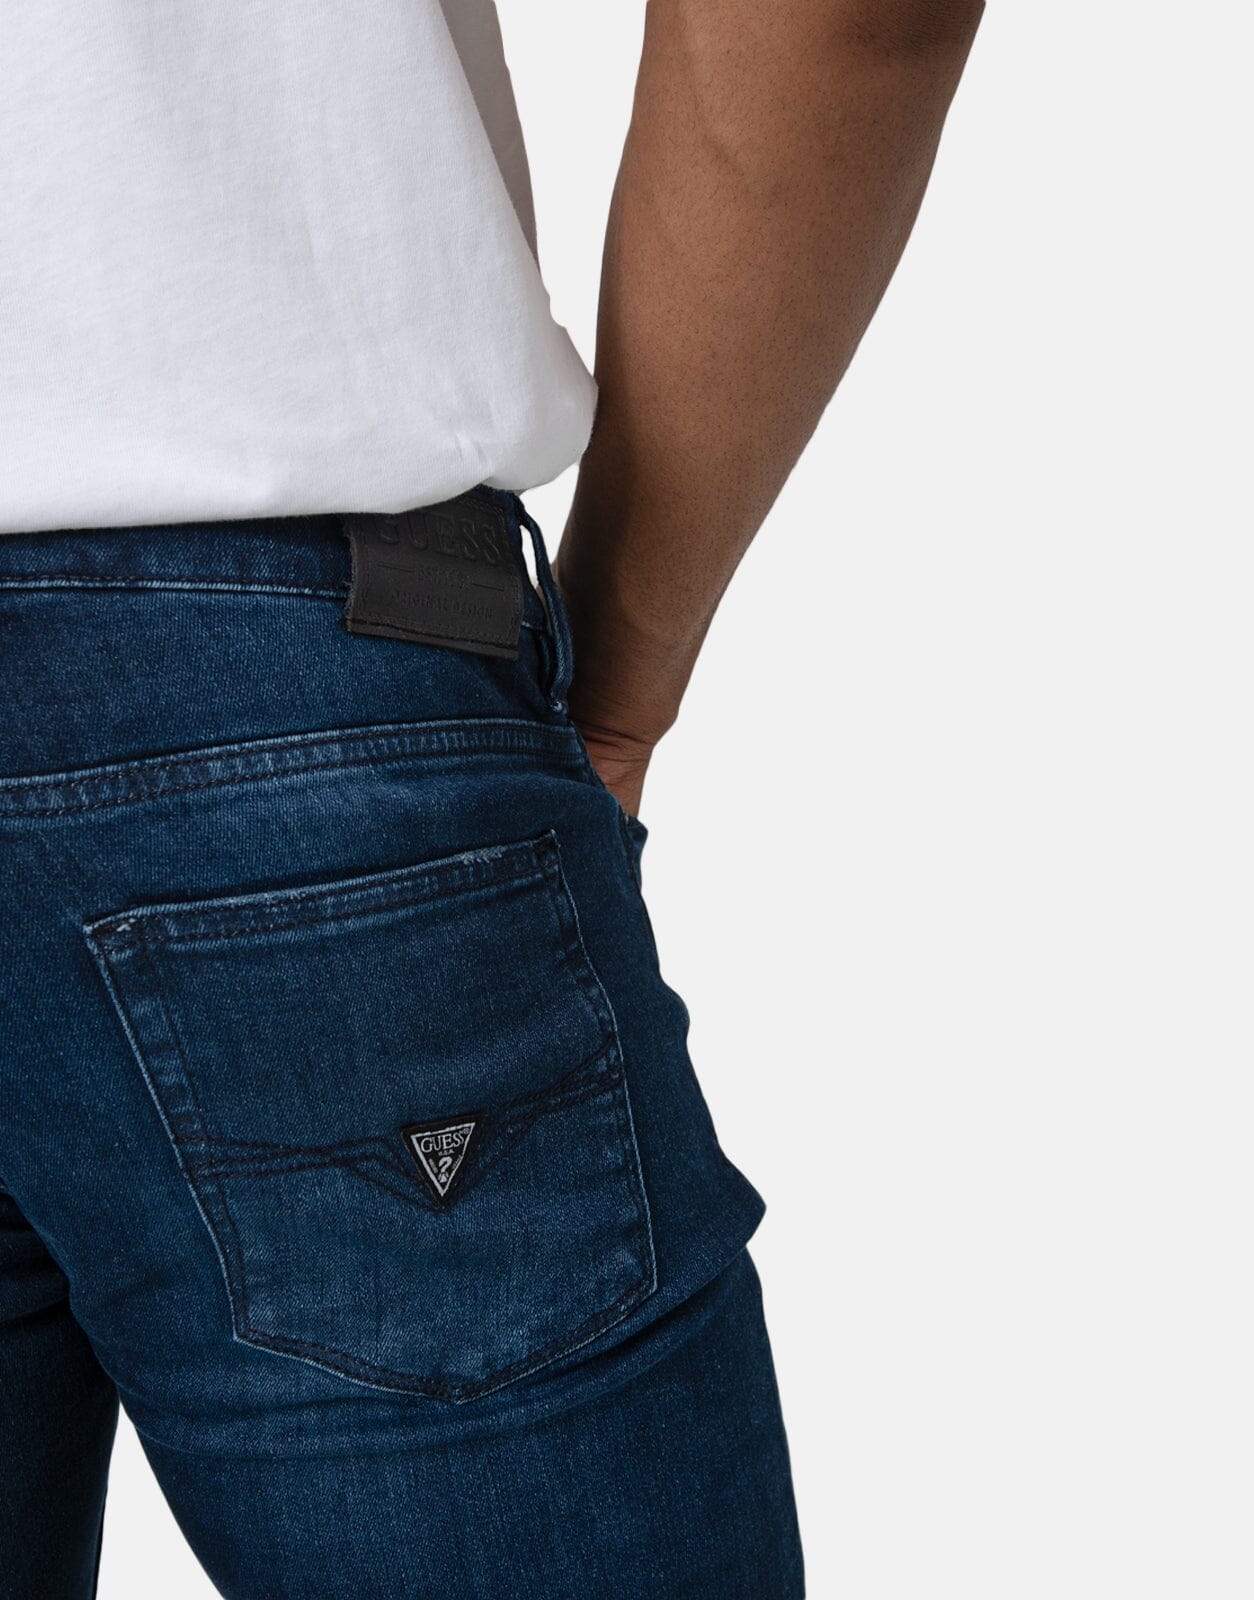 Guess Ringer Dark Eco Slim Taper Jeans - Subwear